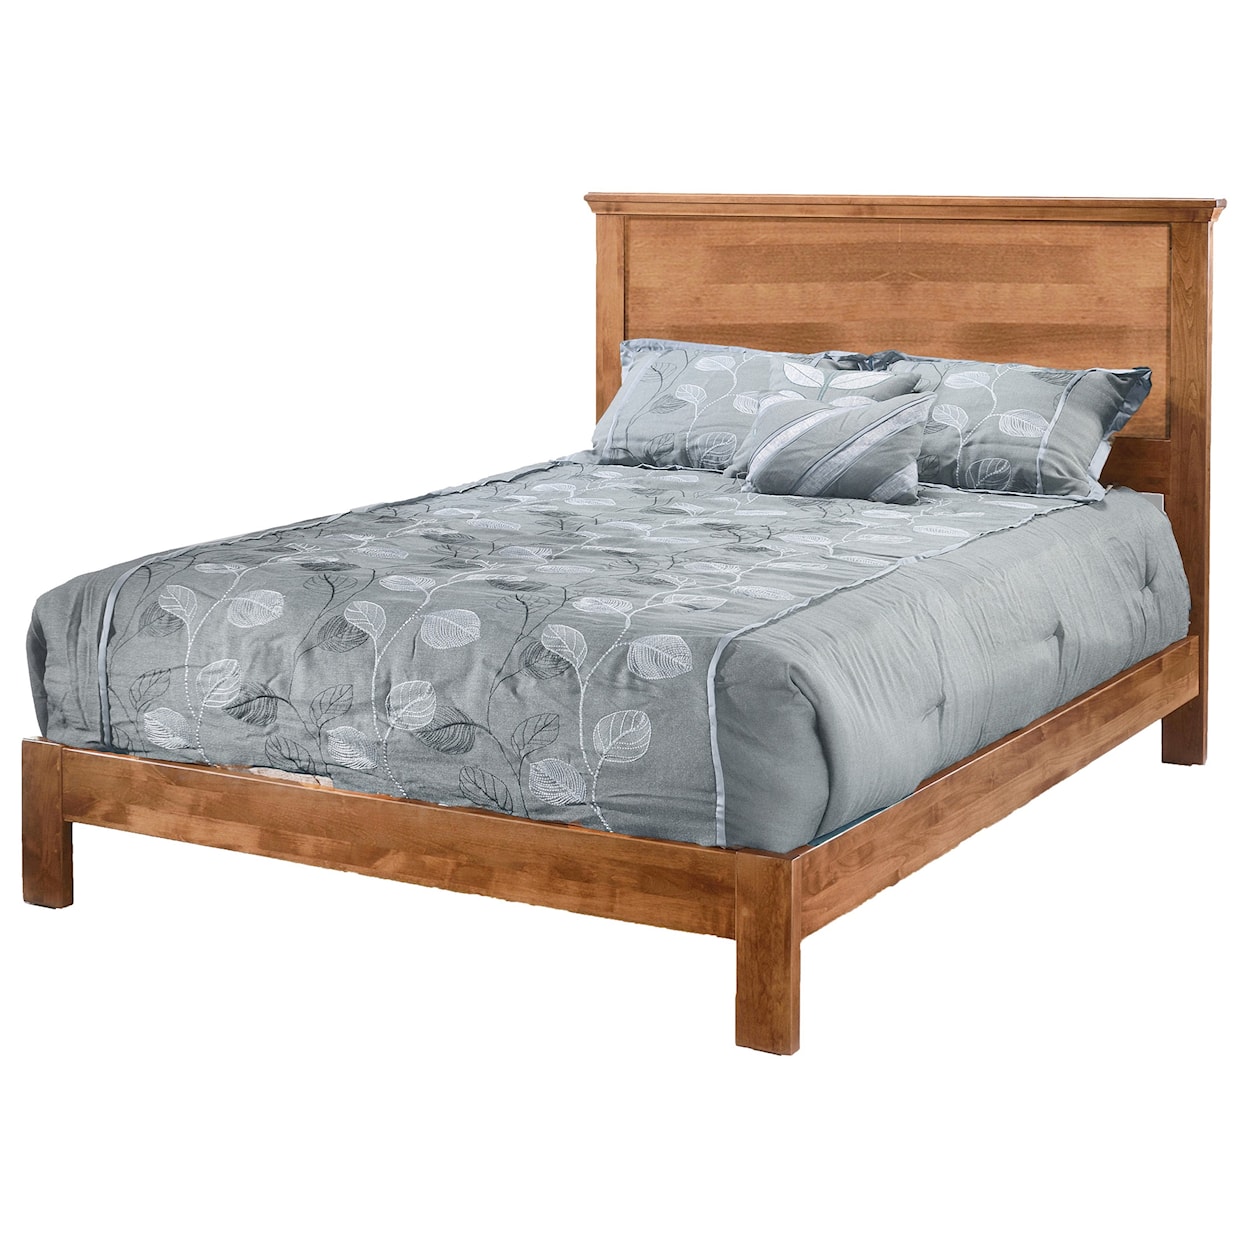 Archbold Furniture DO NOT USE - Shaker Full Alder Plank Bed